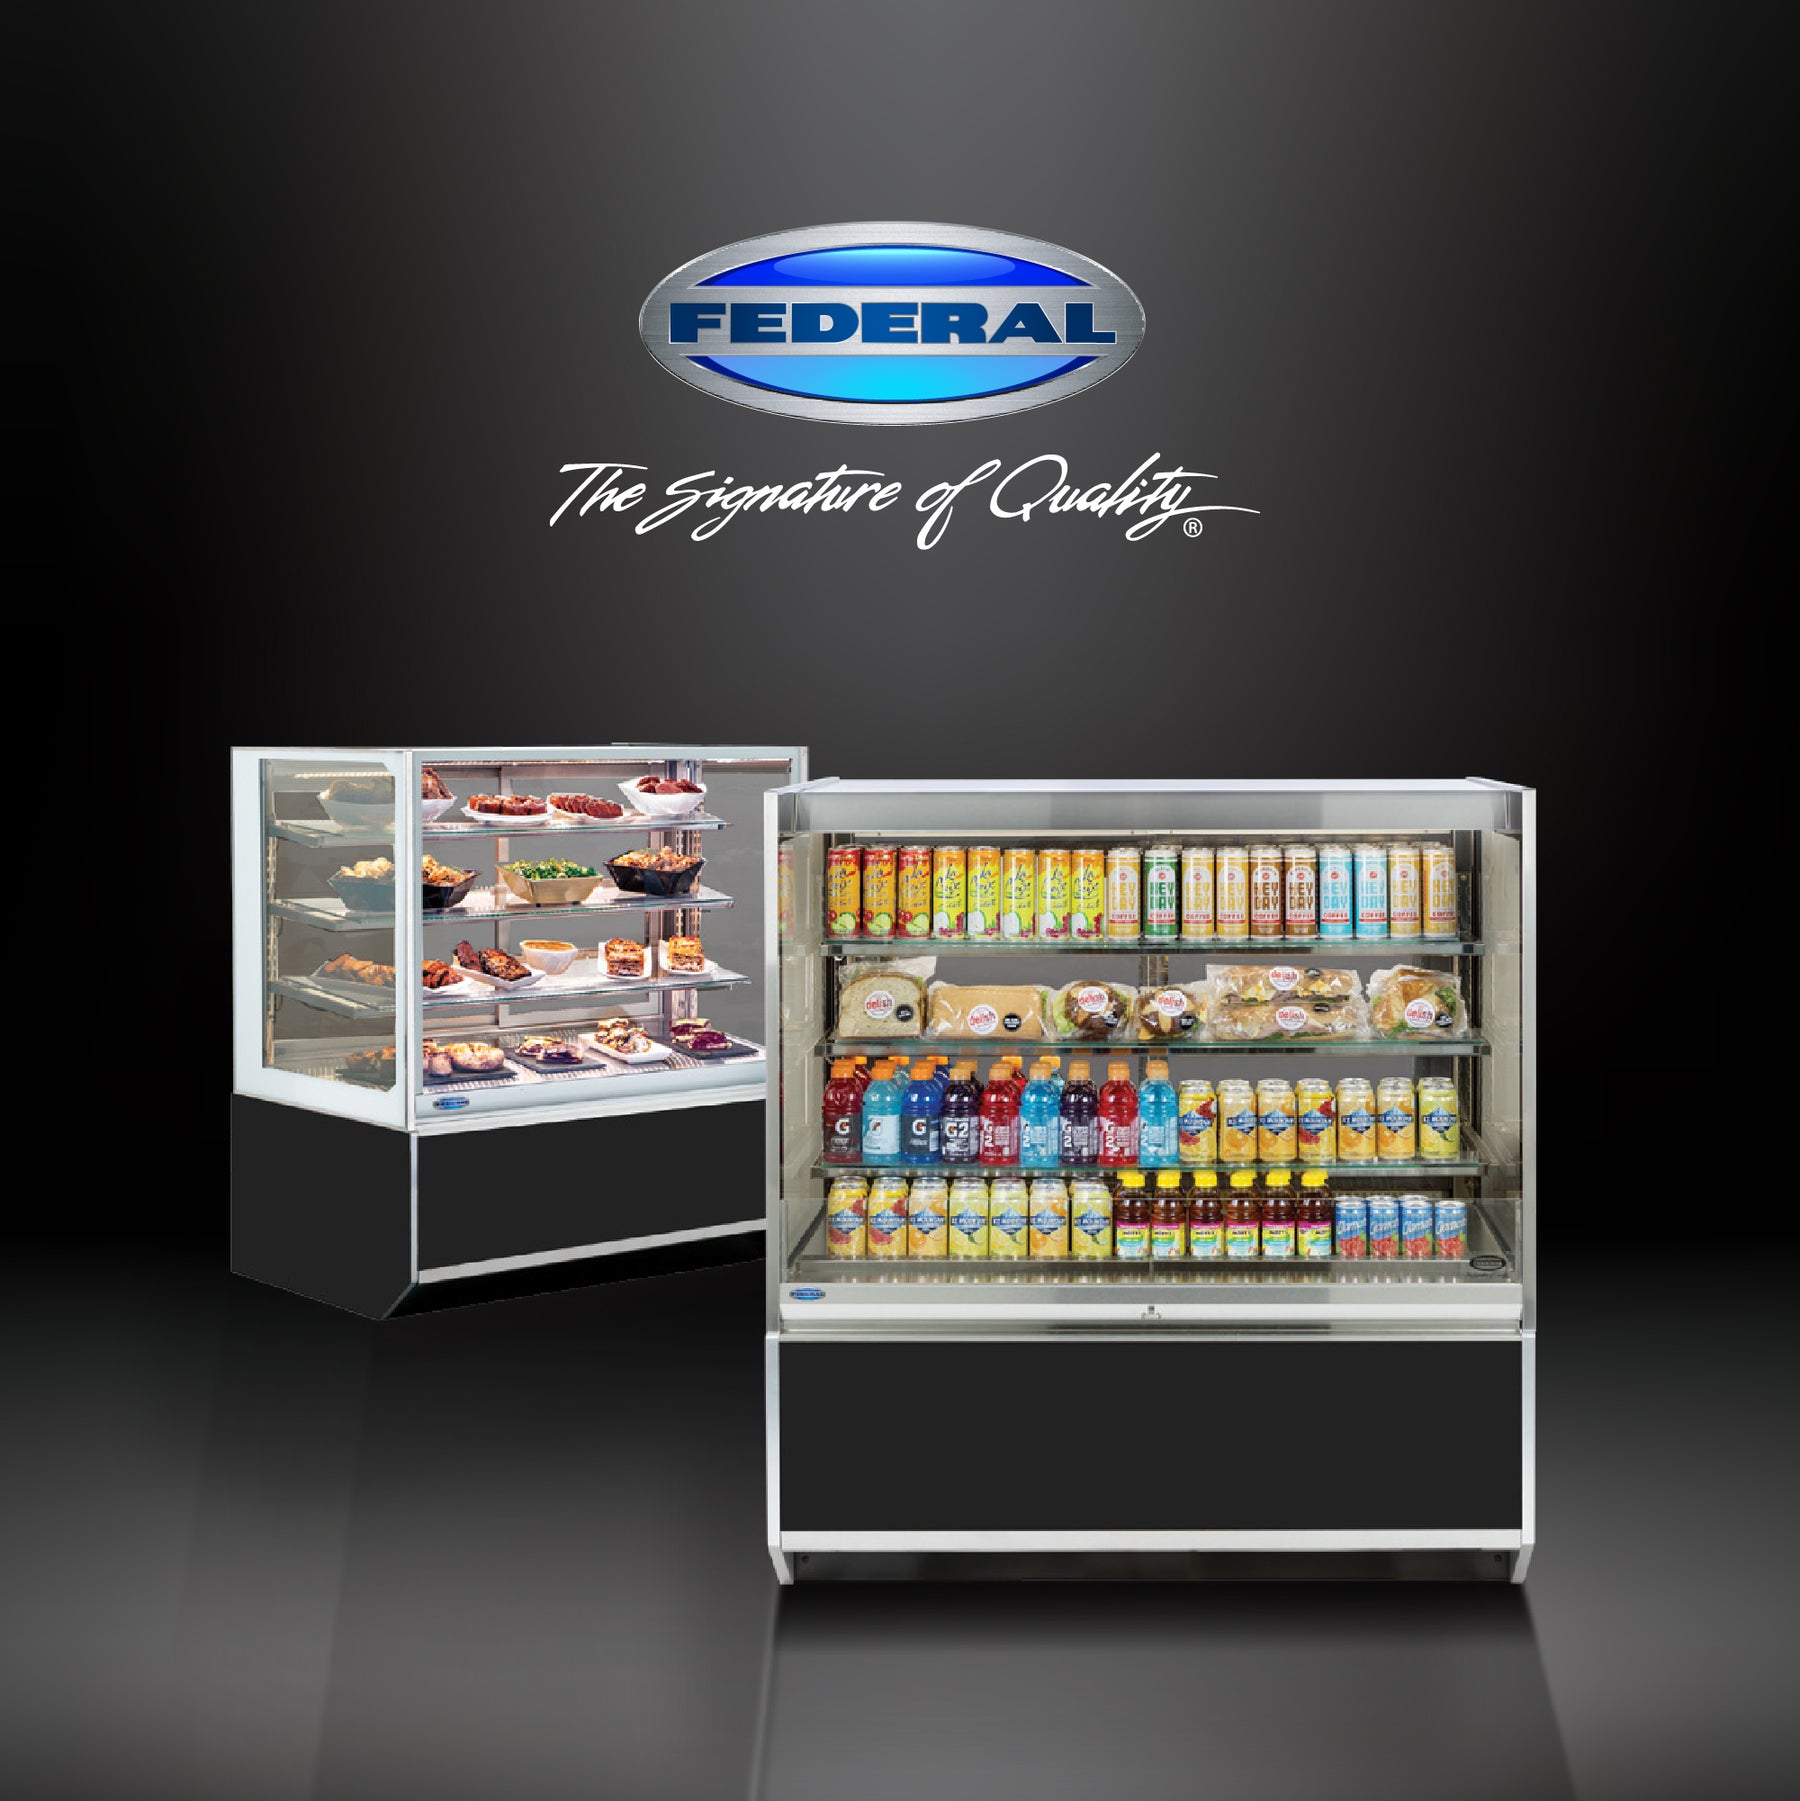 Federal Industries Italian Series Catalog Highlight sold at Gator Chef Restaurant Equipment & Kitchen Supplies